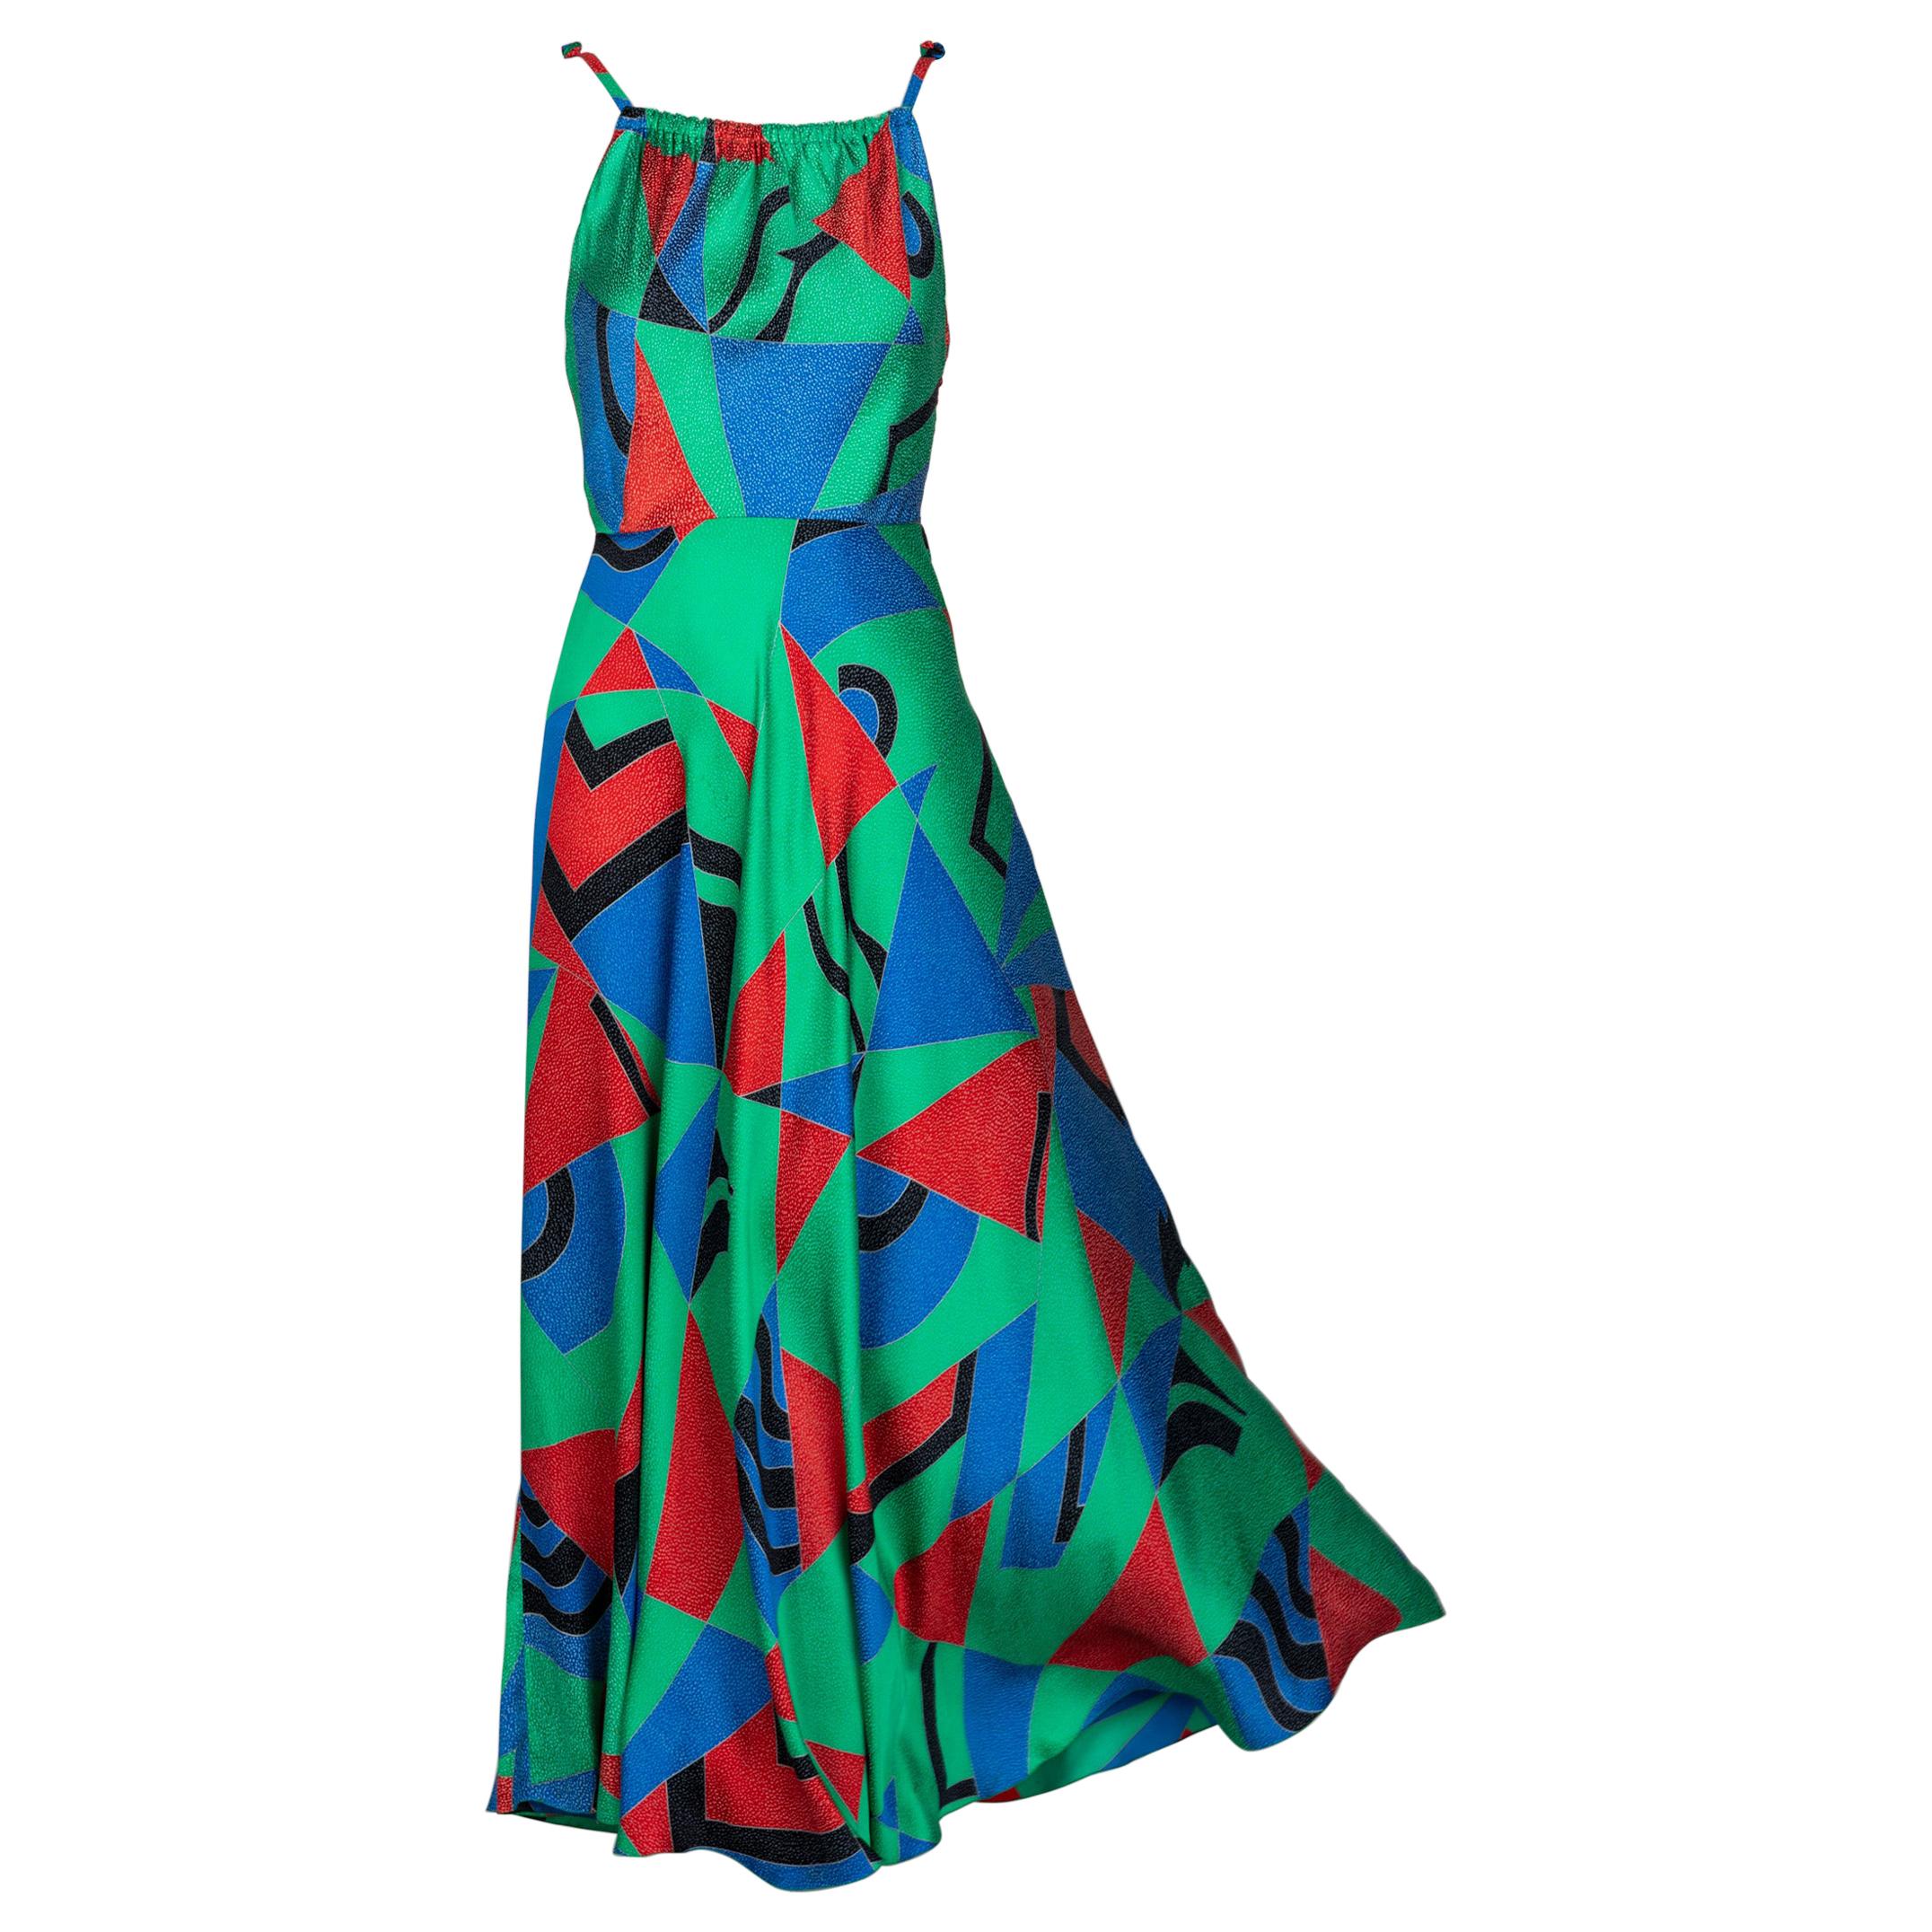 Chloe Karl Lagerfeld Cubist Green Silk Print Sleeveless Dress, 1970s For Sale